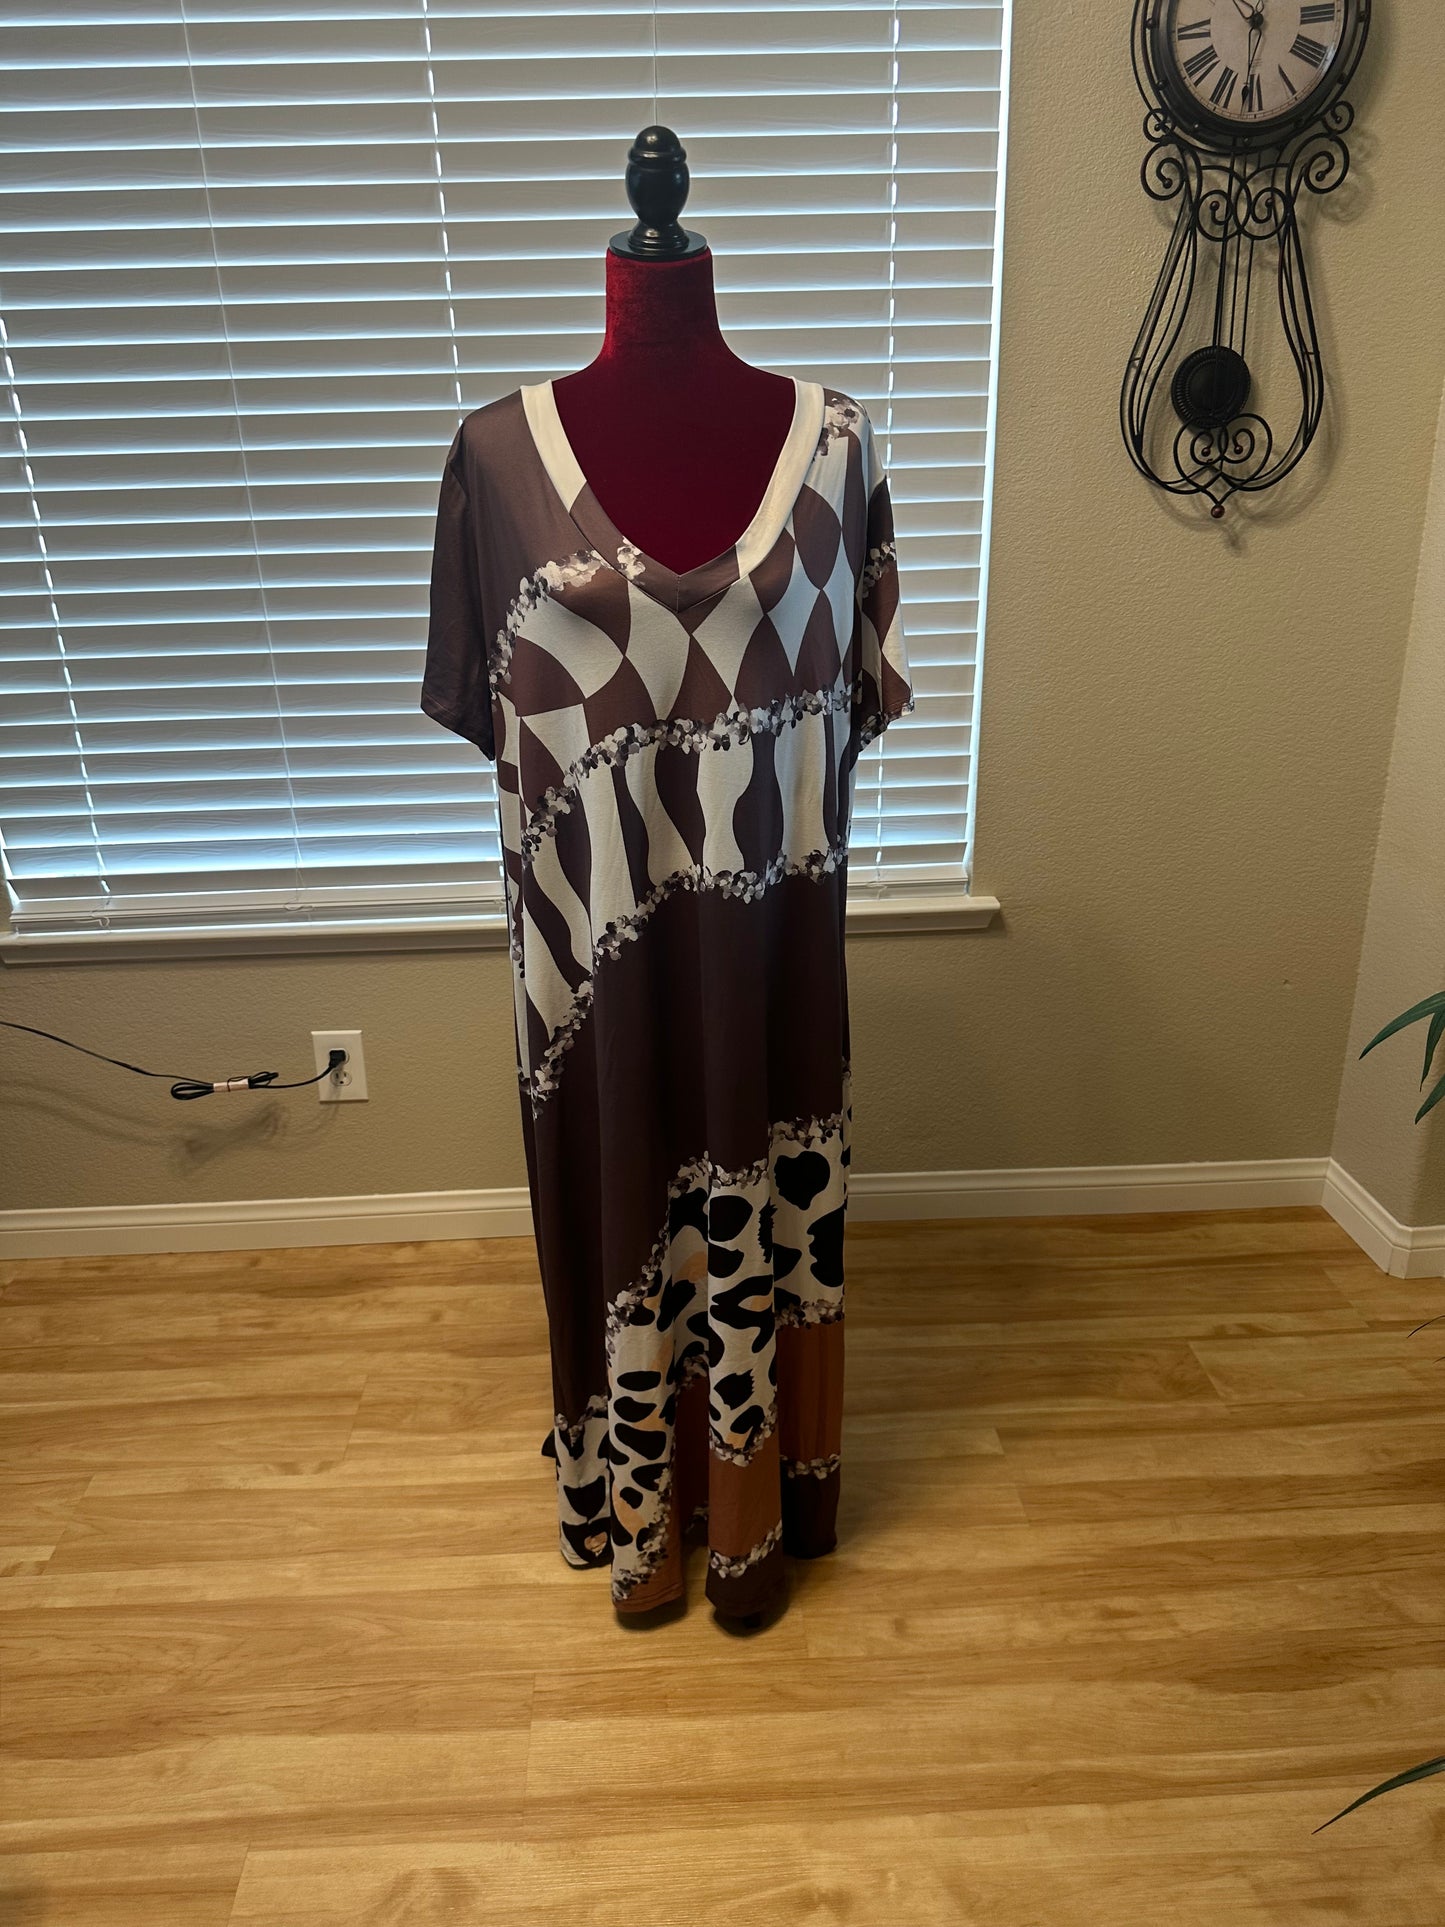 Printed Full Length Summer Dress, US Size 16